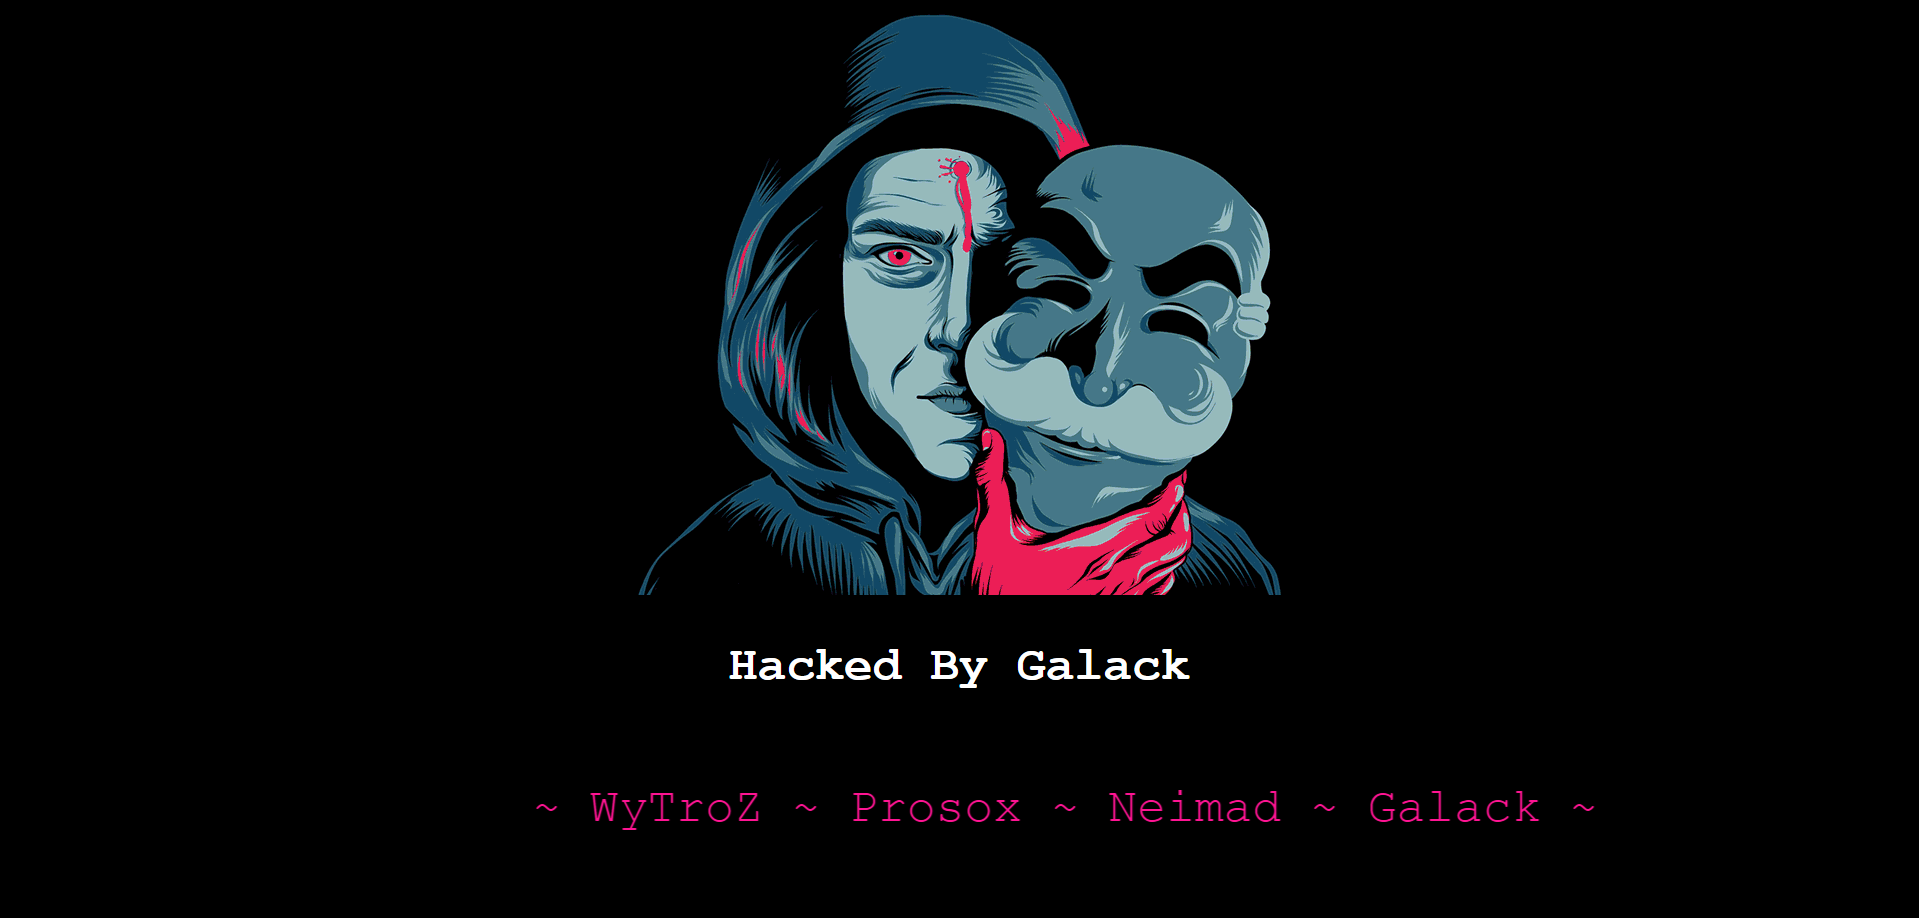 Galack.gif - 92.66 KB